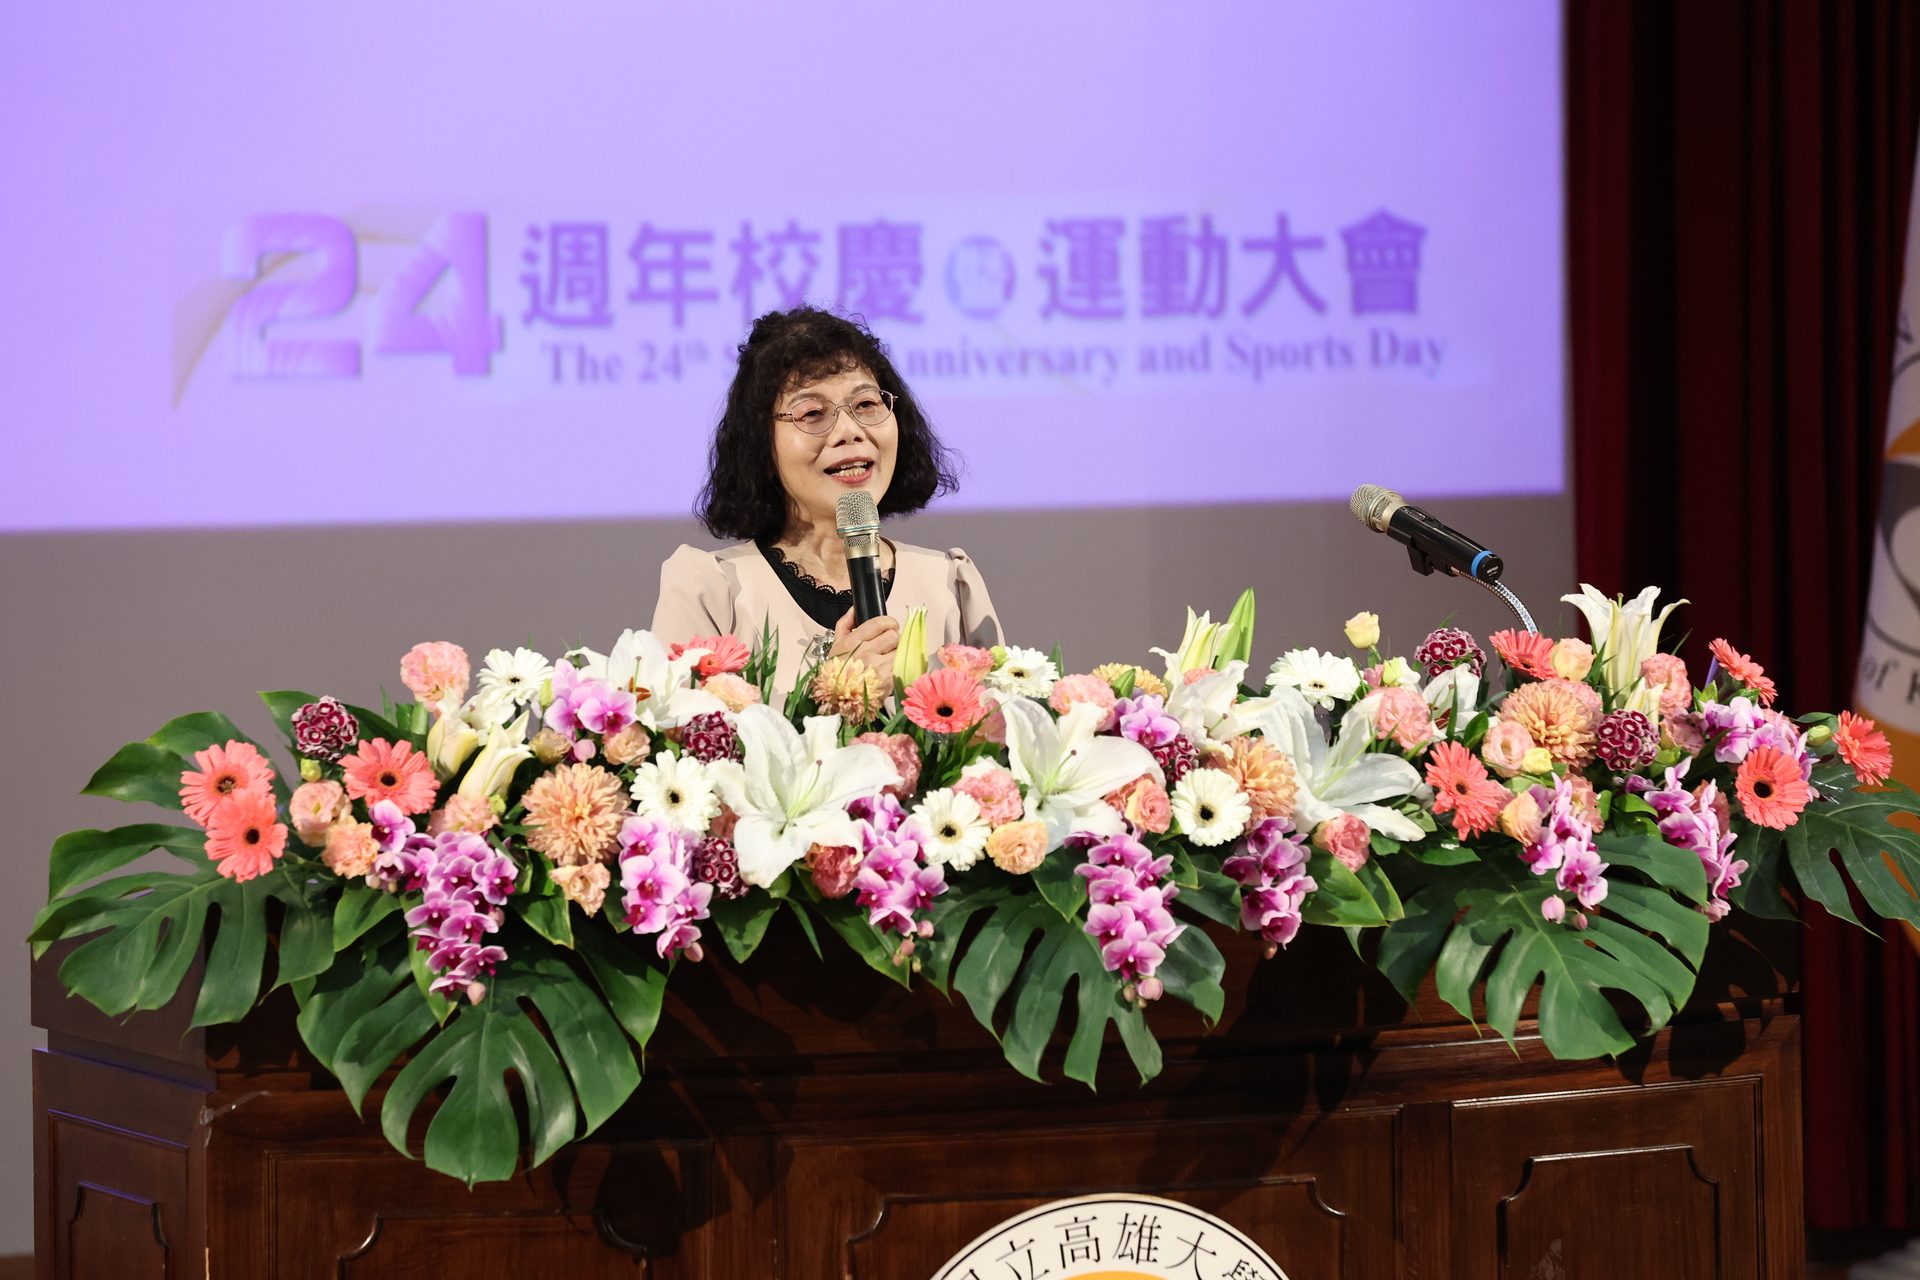 Speech by President Chen Yueh-Tuan 01